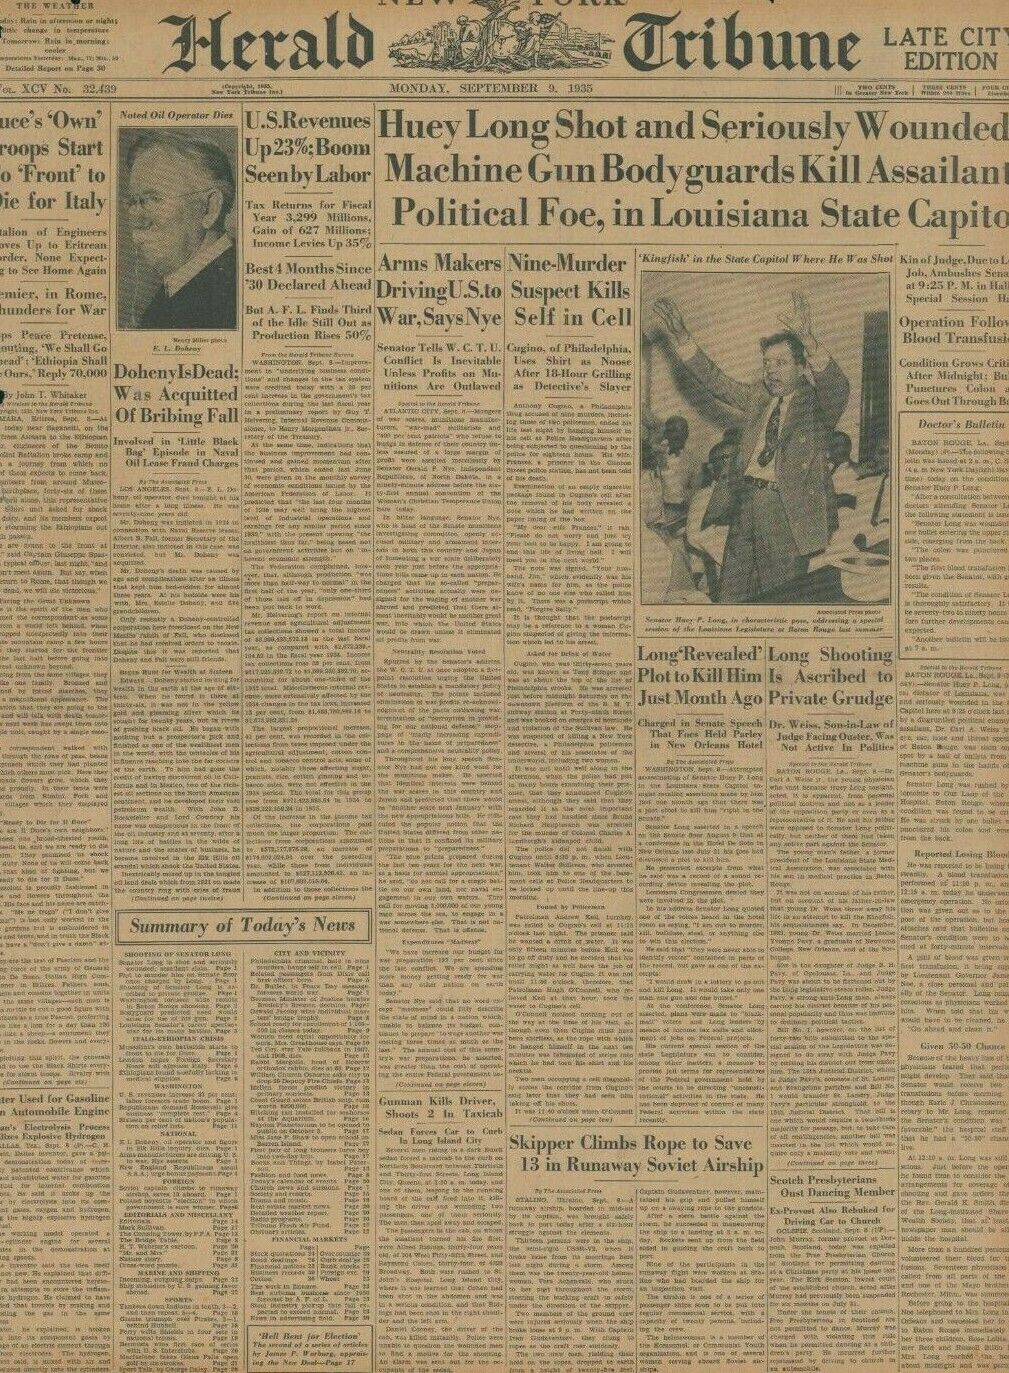 Senator Huey Long Kingfish Shot Given 50:50 Chance Carl Weiss September 9 1935 